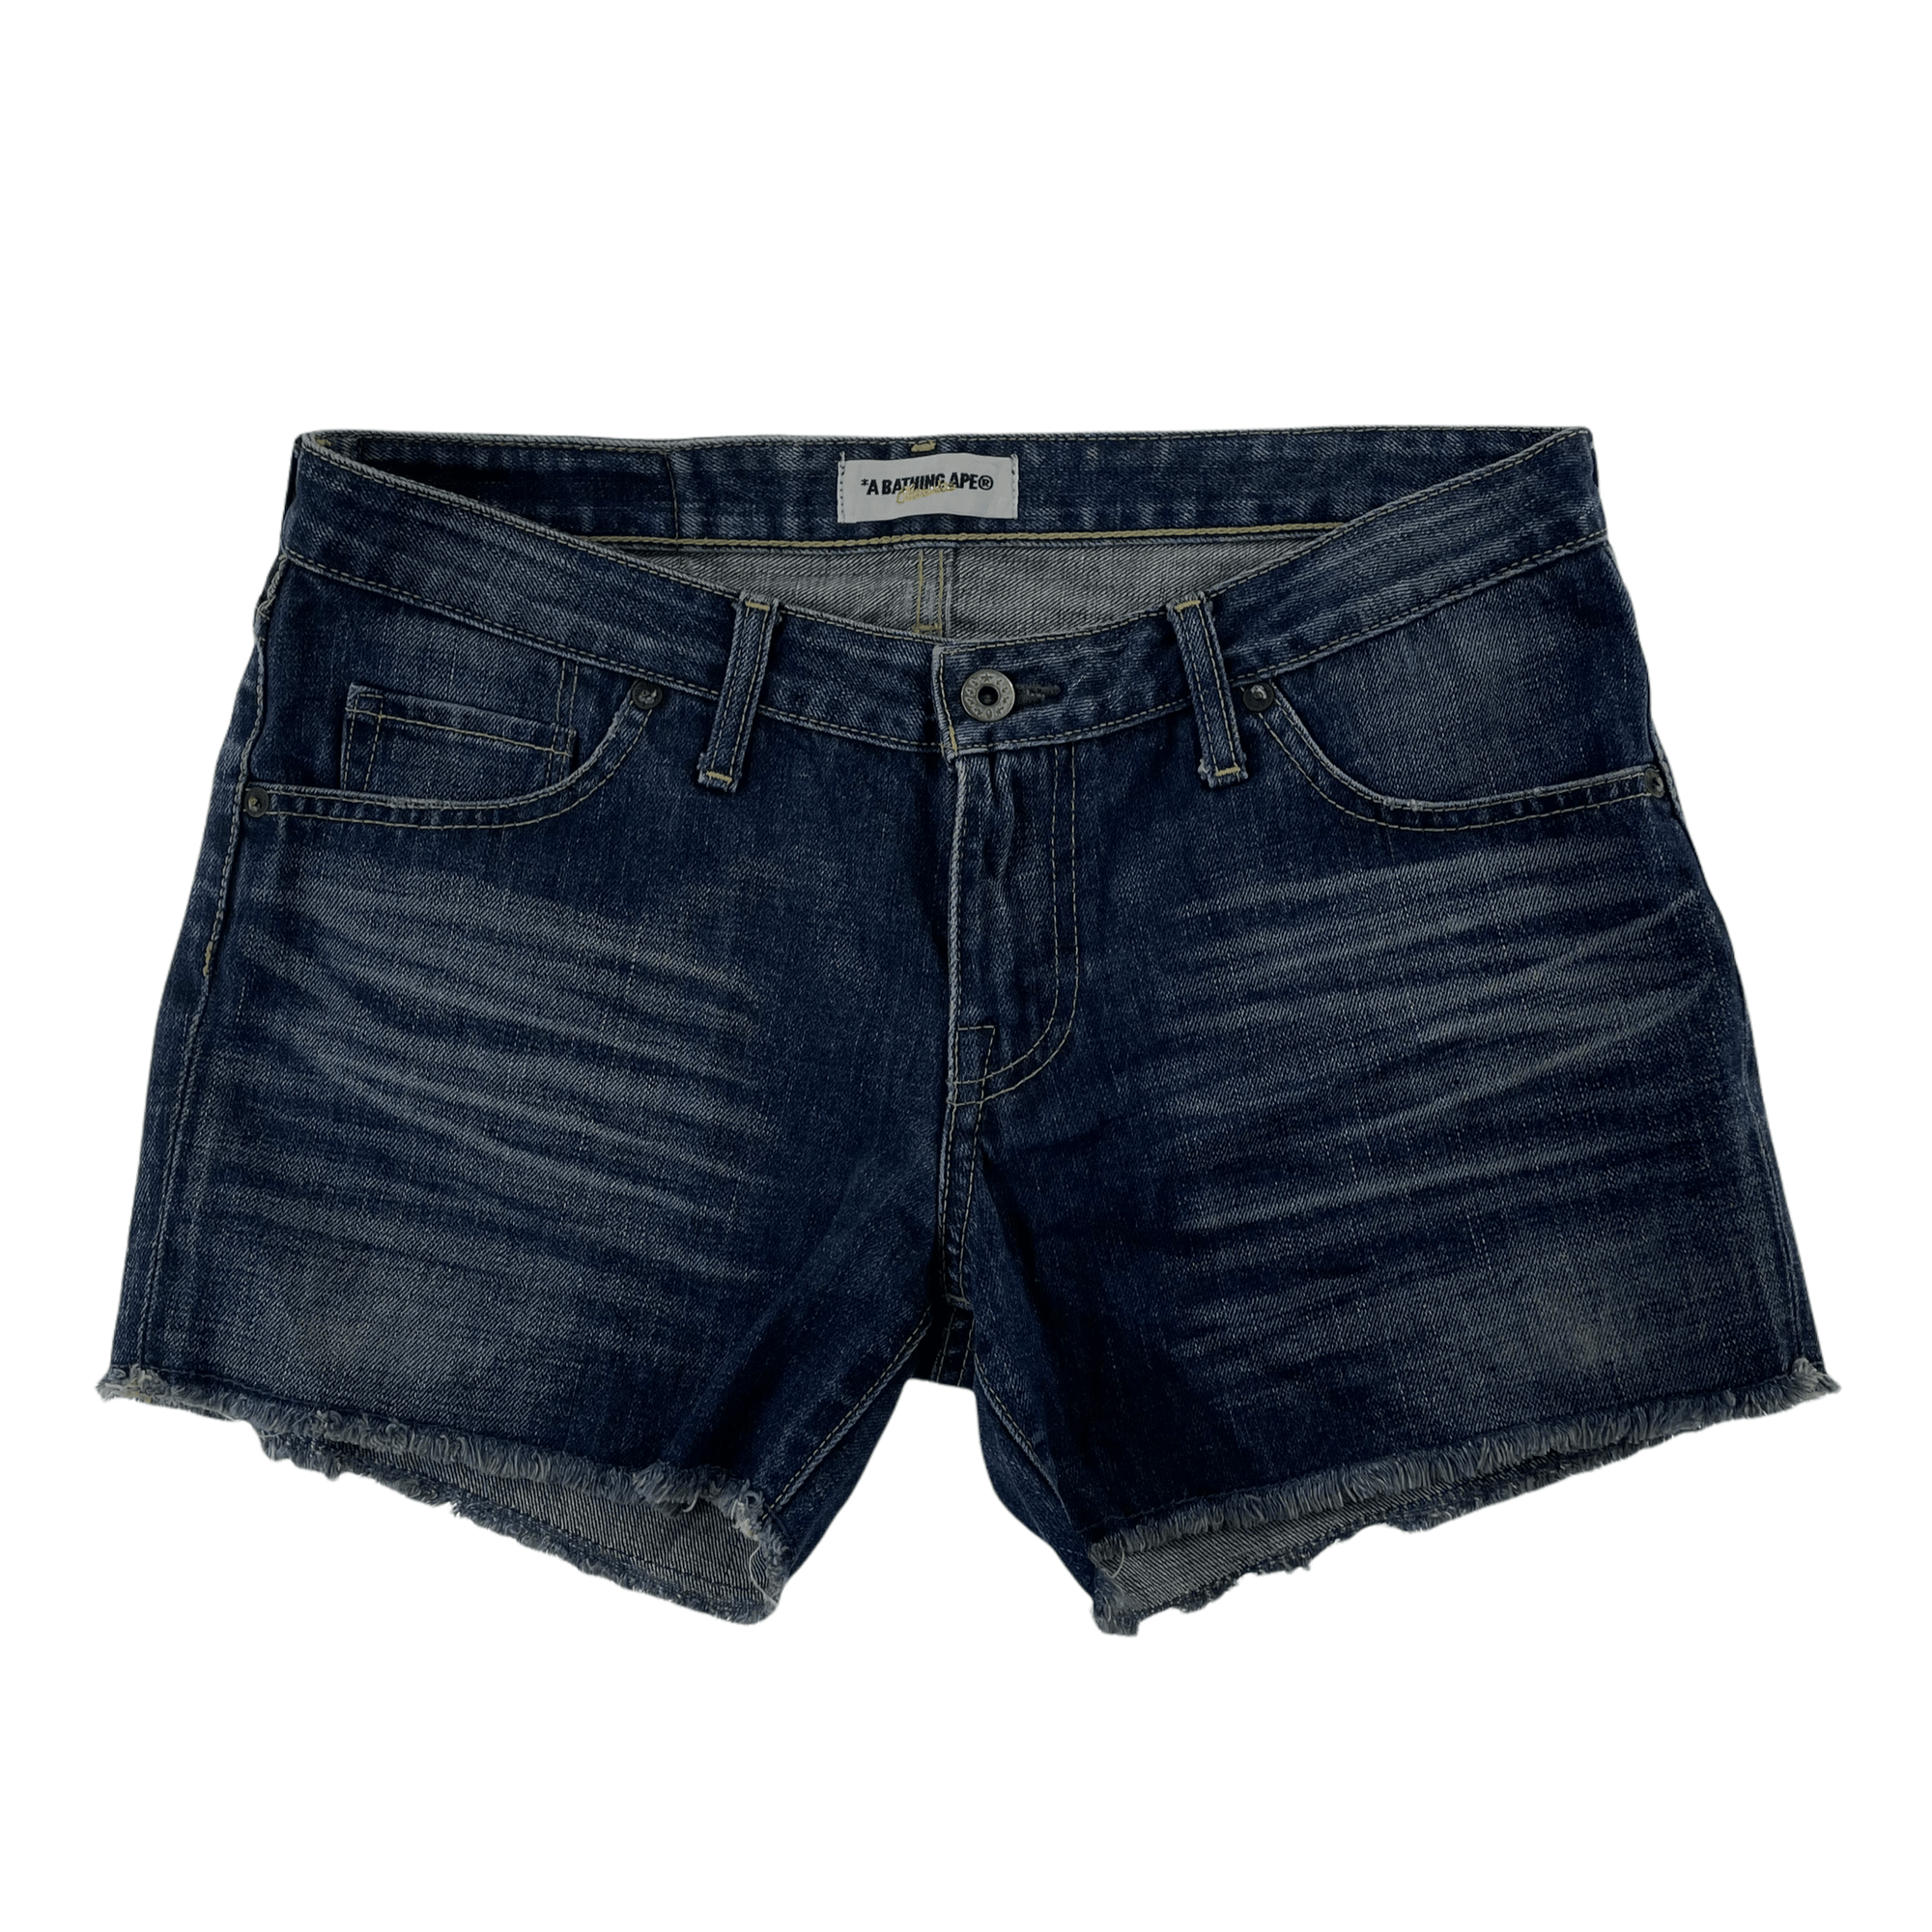 Bape sta denim short shorts W32 - second wave vintage store